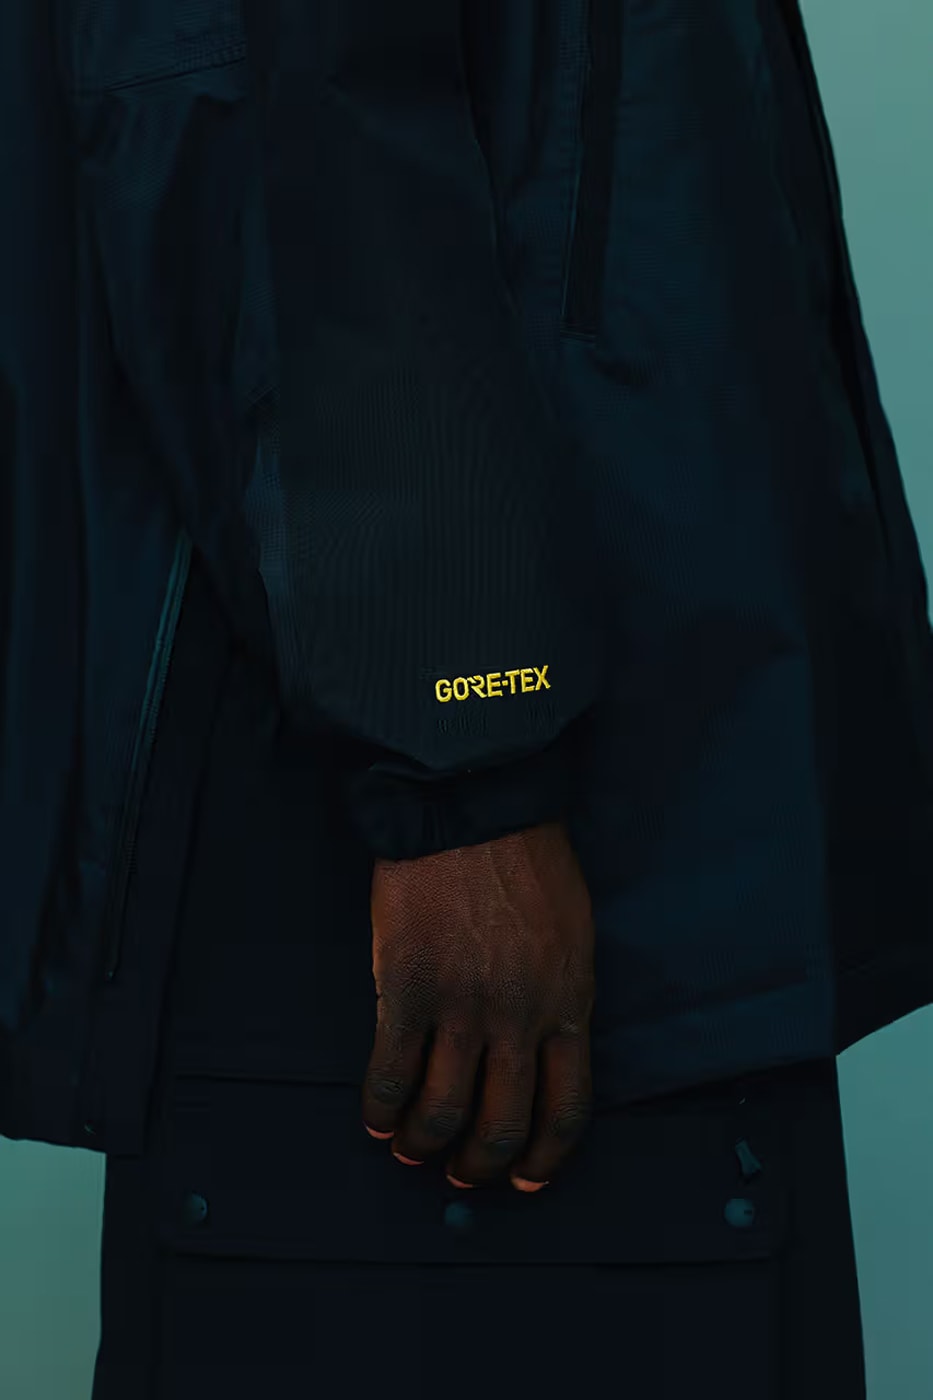 DAIWA PIER39 Drops Two Limited Edition GORE-TEX Technical Jackets japanese street style brand streetwear functional waterproof jacket 